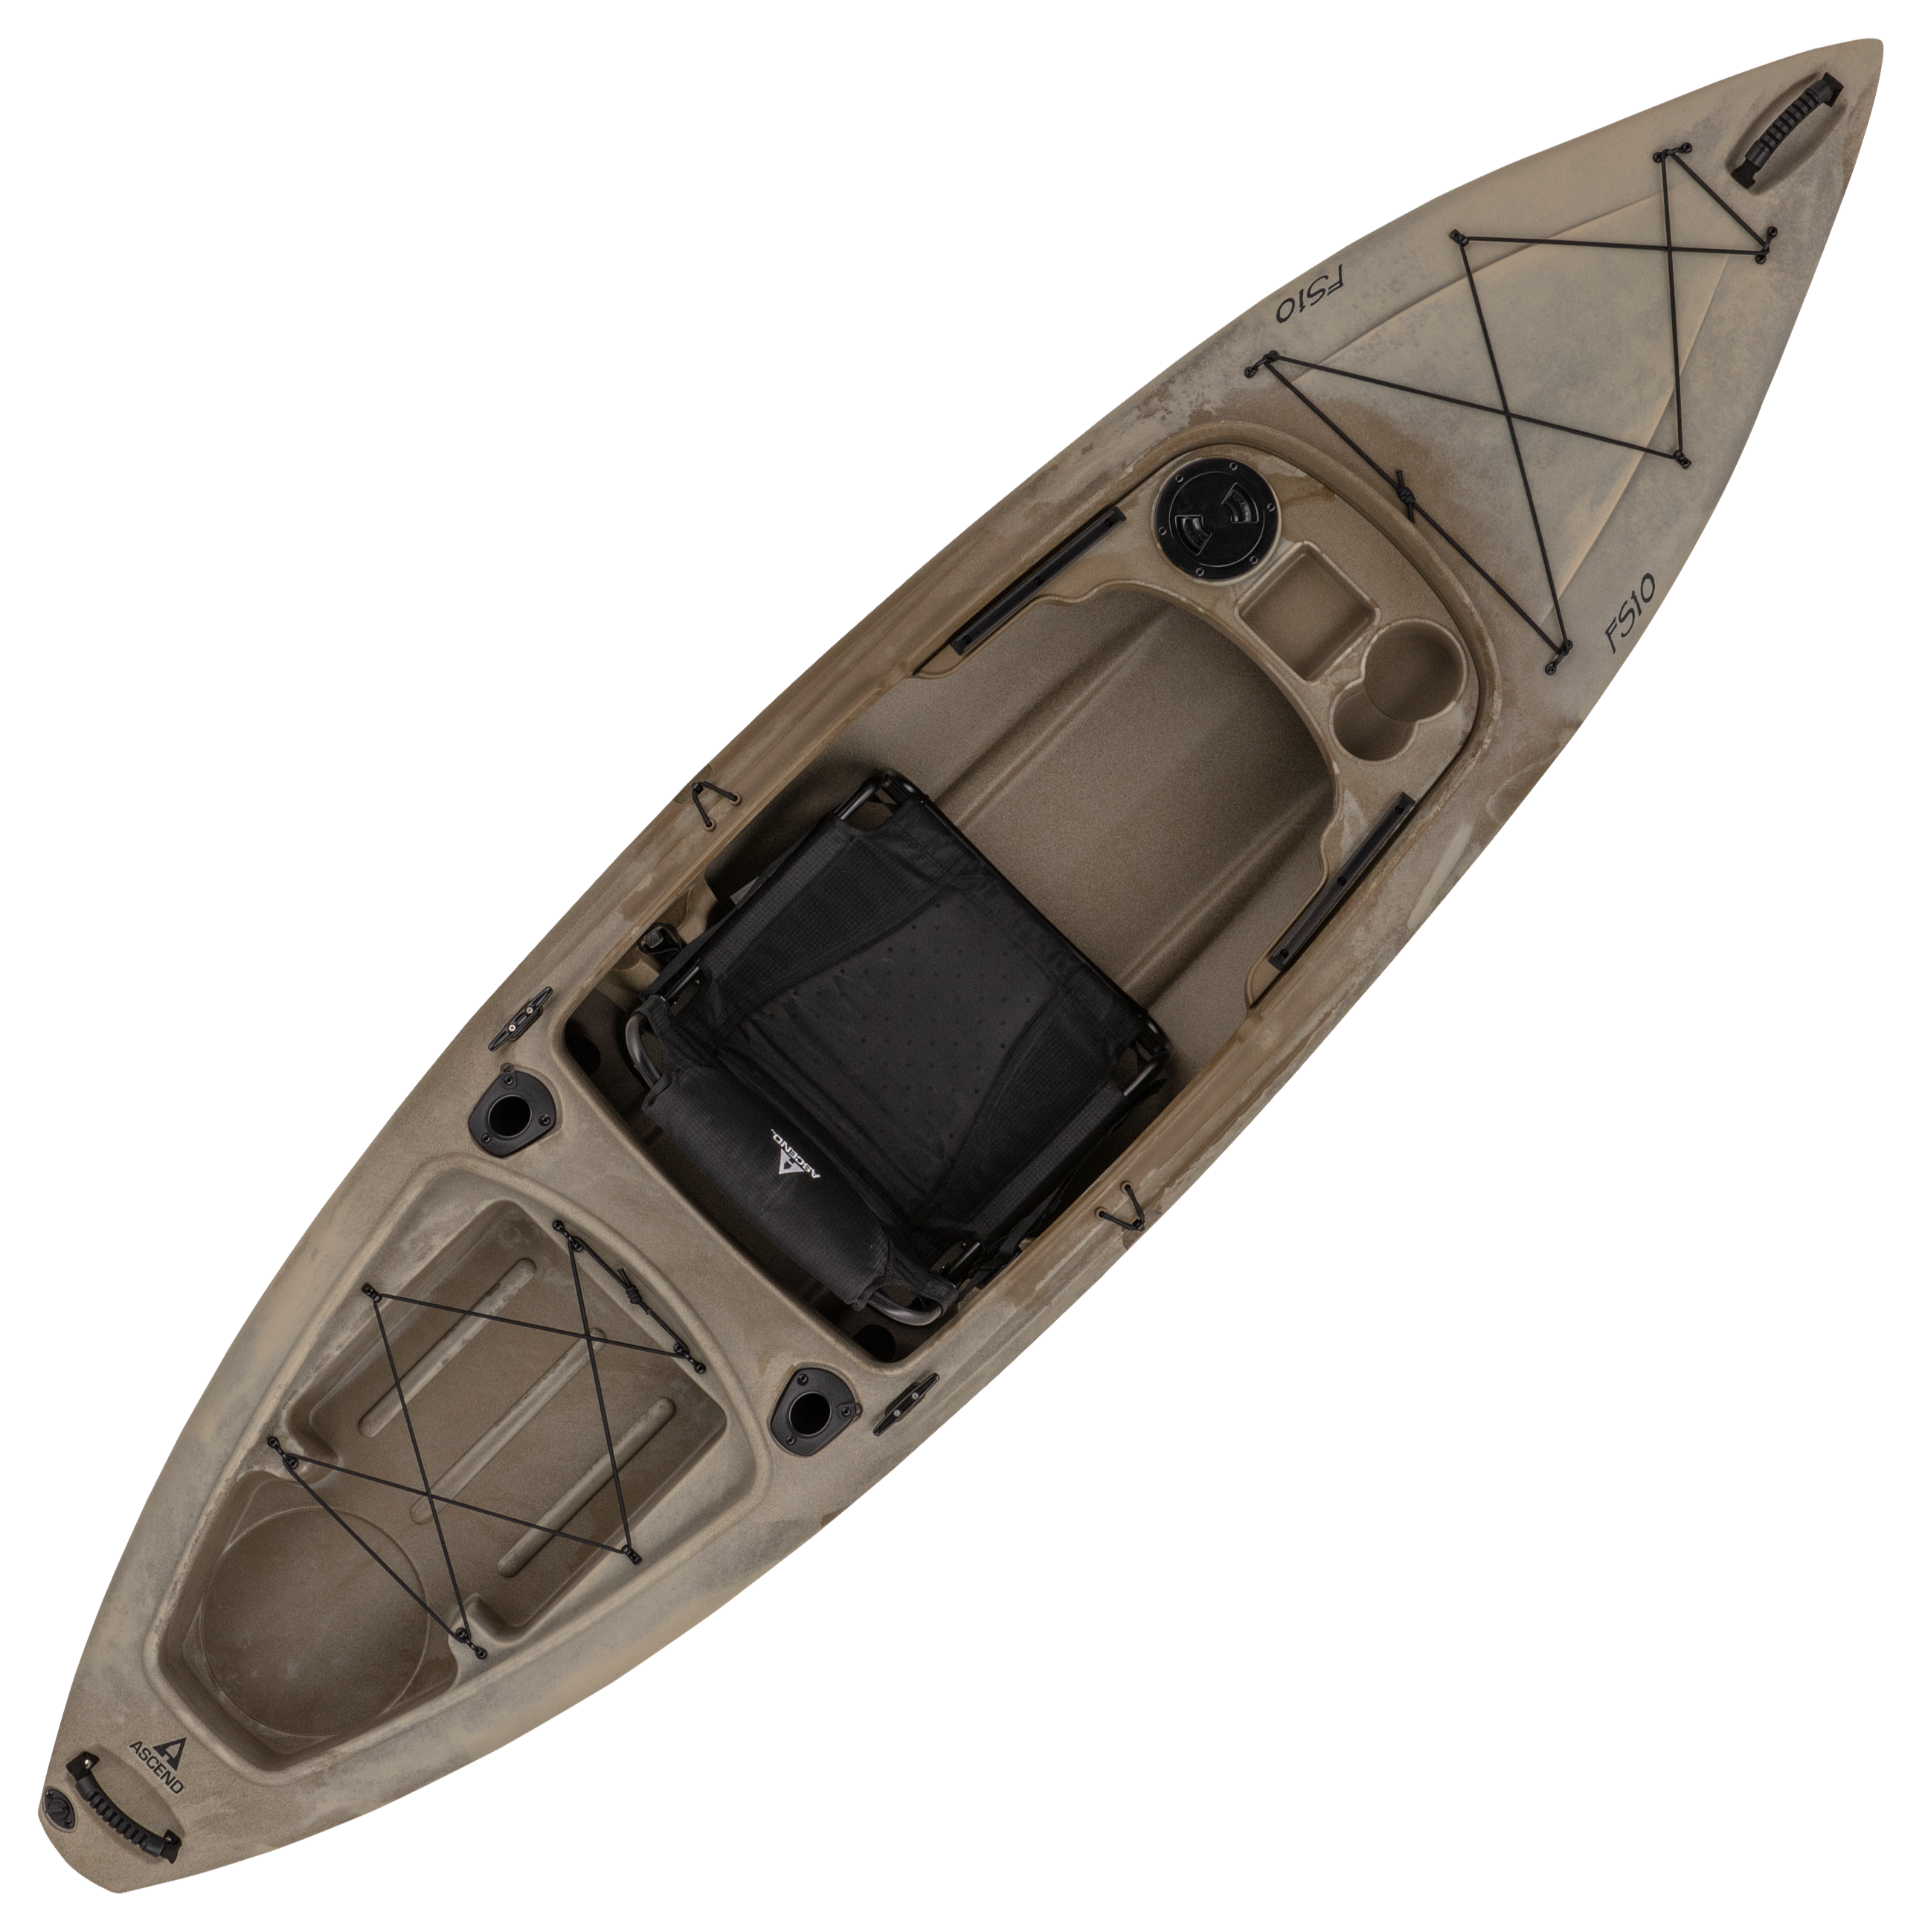 Best kayak fishing accessories: 10 essentials for kayak fishing